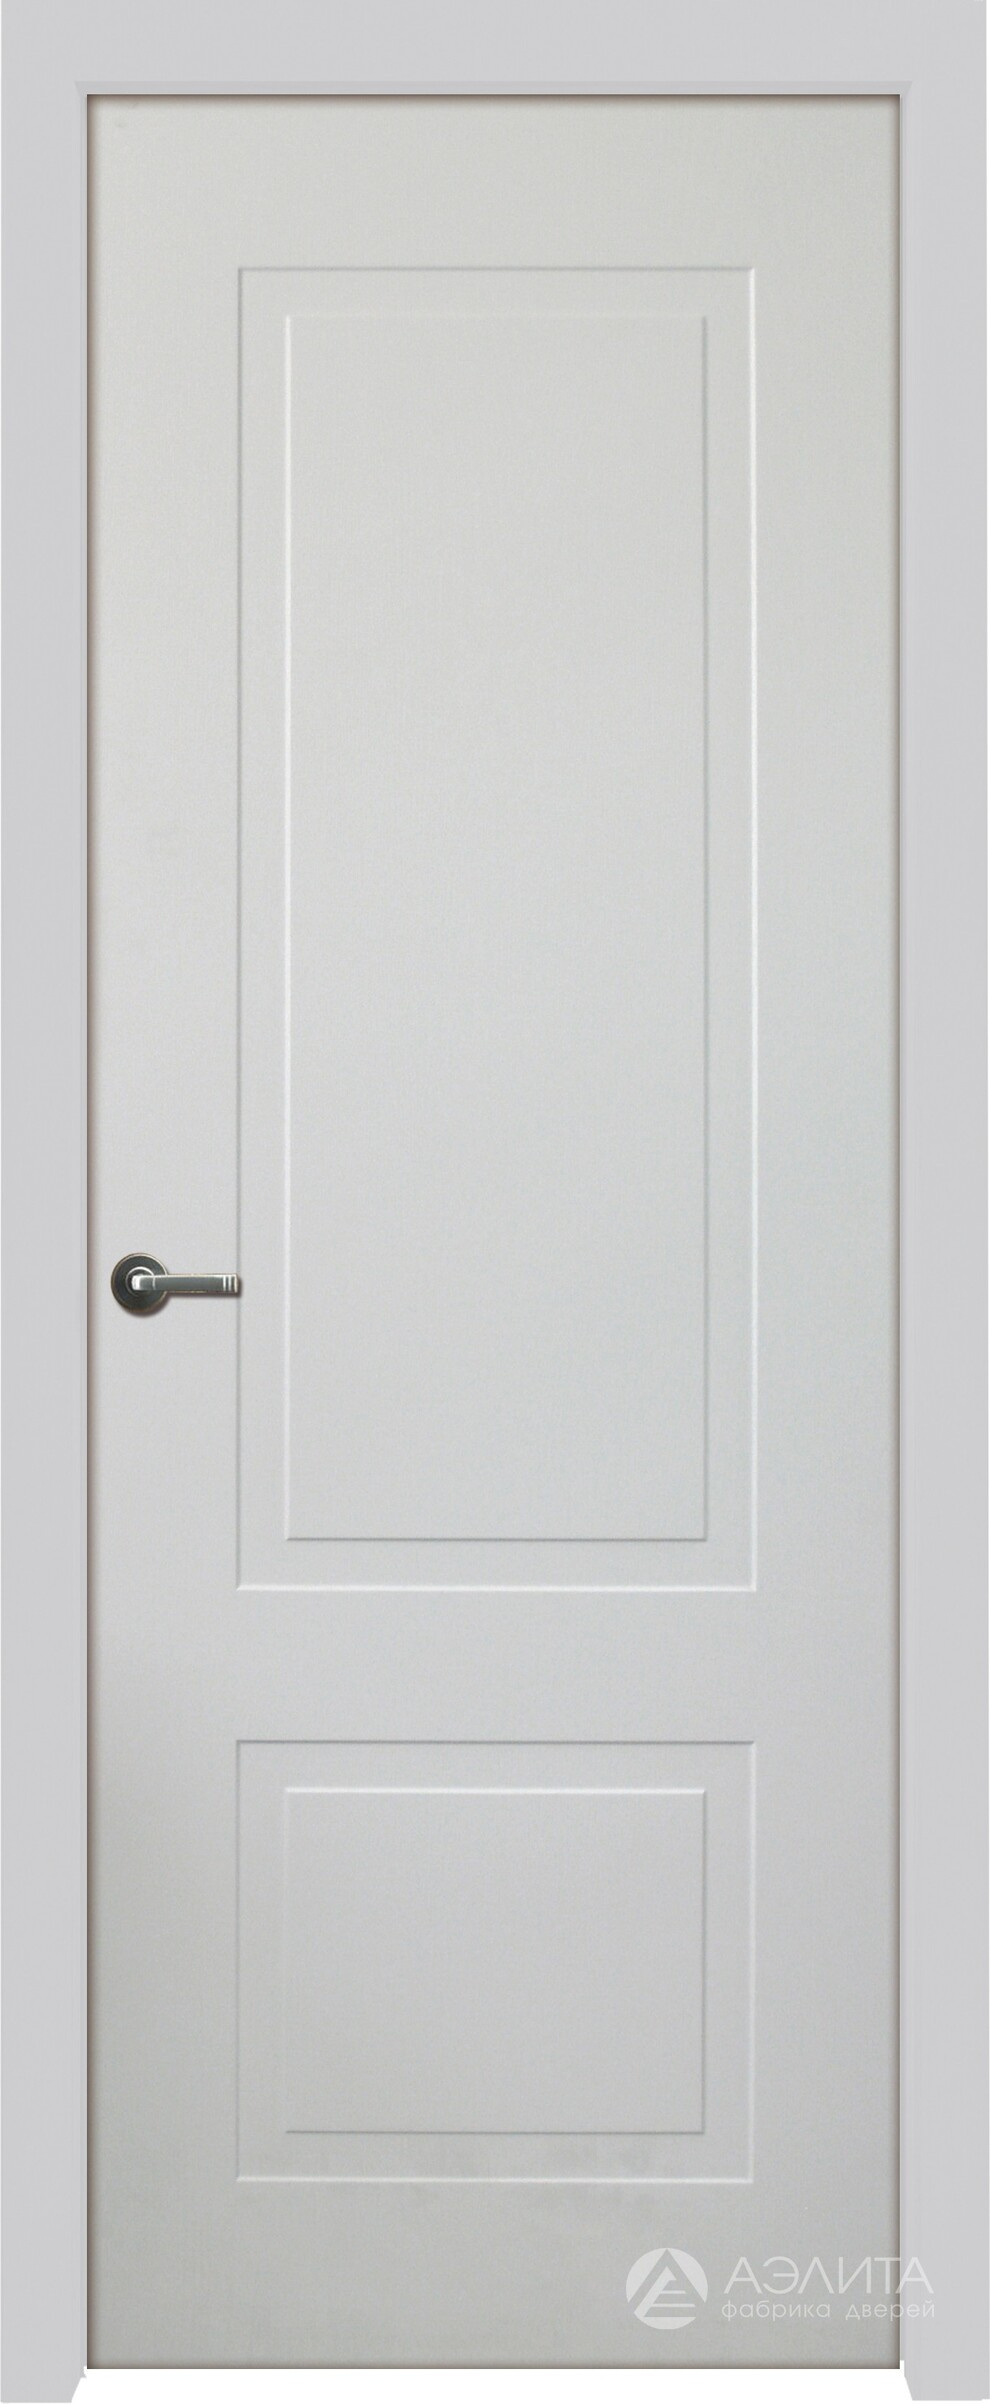 Аэлита Межкомнатная дверь Твин 50 ДГ, арт. 22175 - фото №1